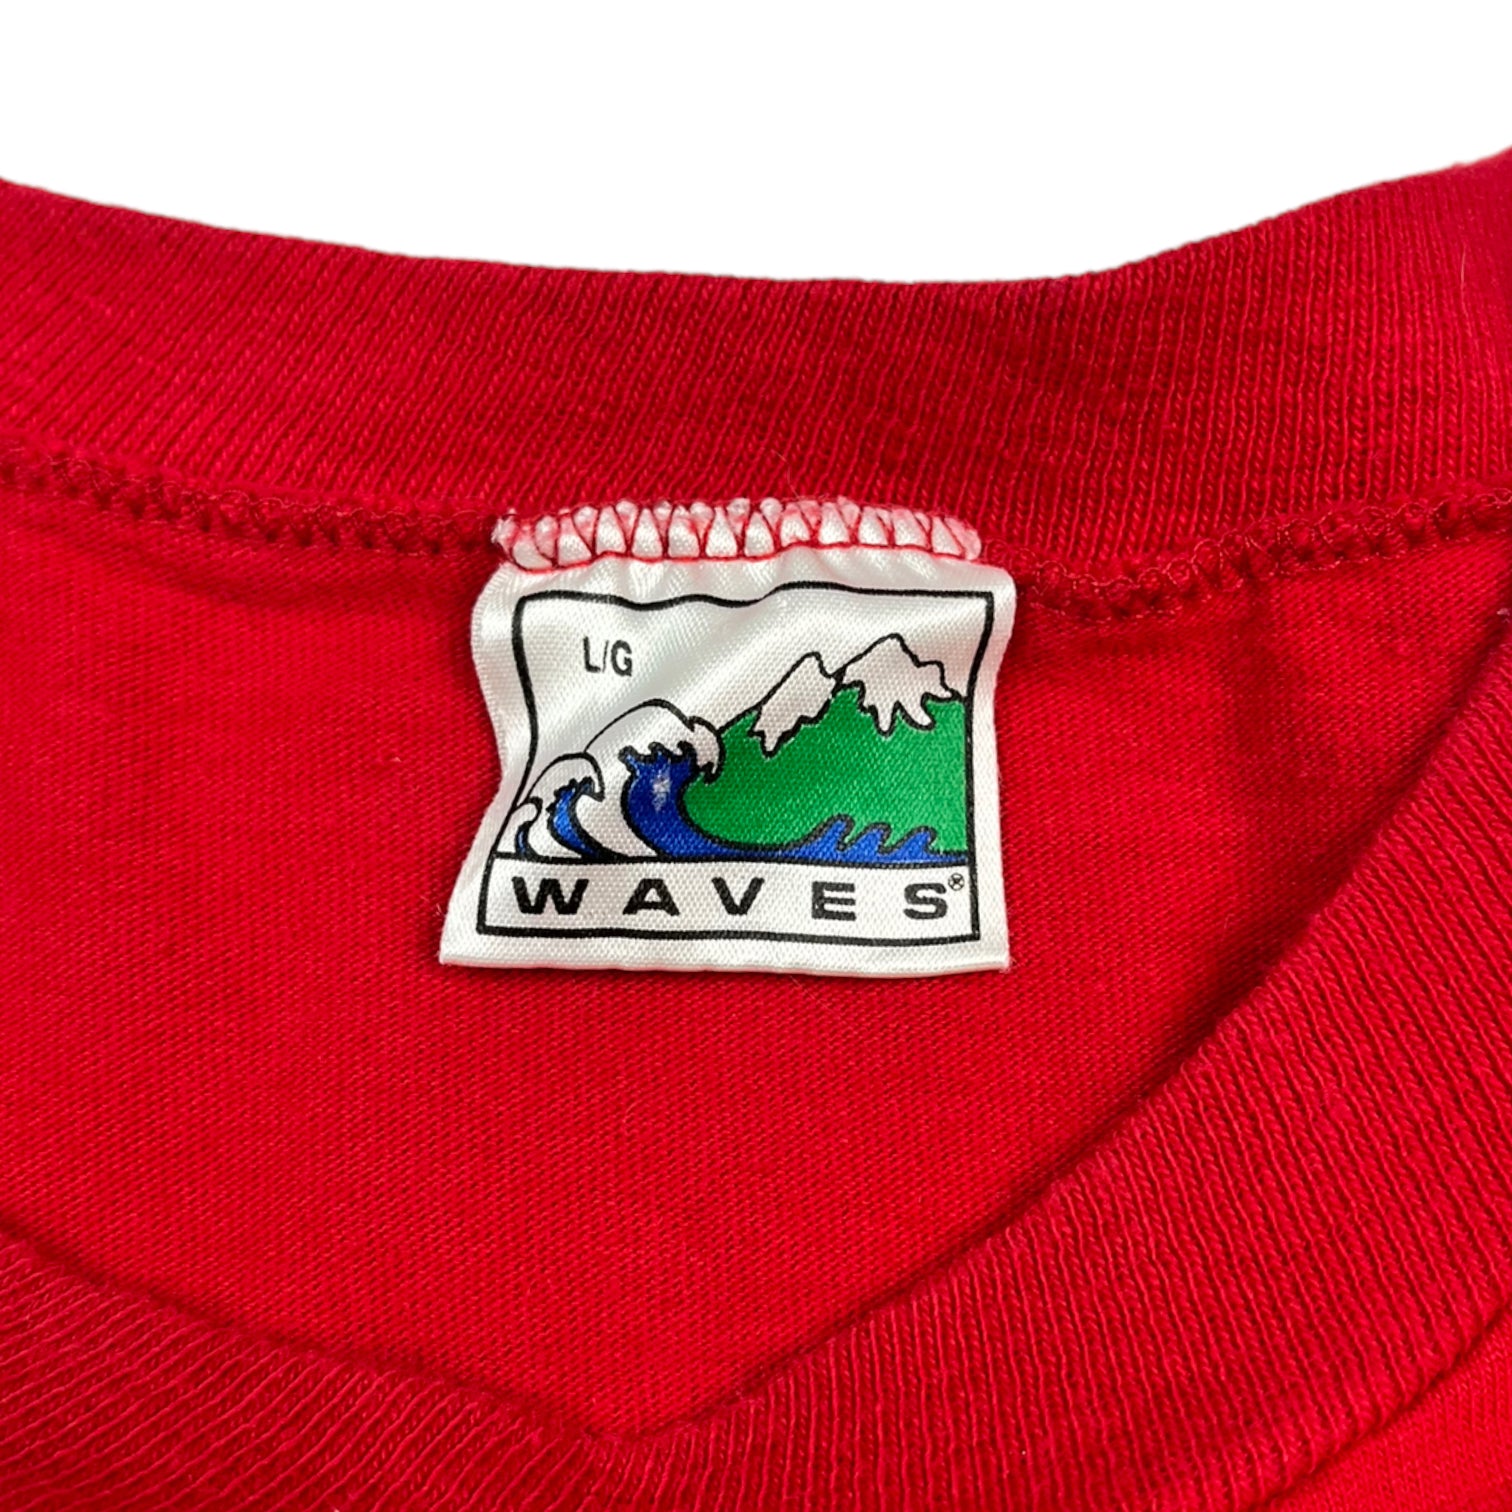 1992 Calgary Flames Logo T-shirt - Red & Yellow NHL T-Shirt